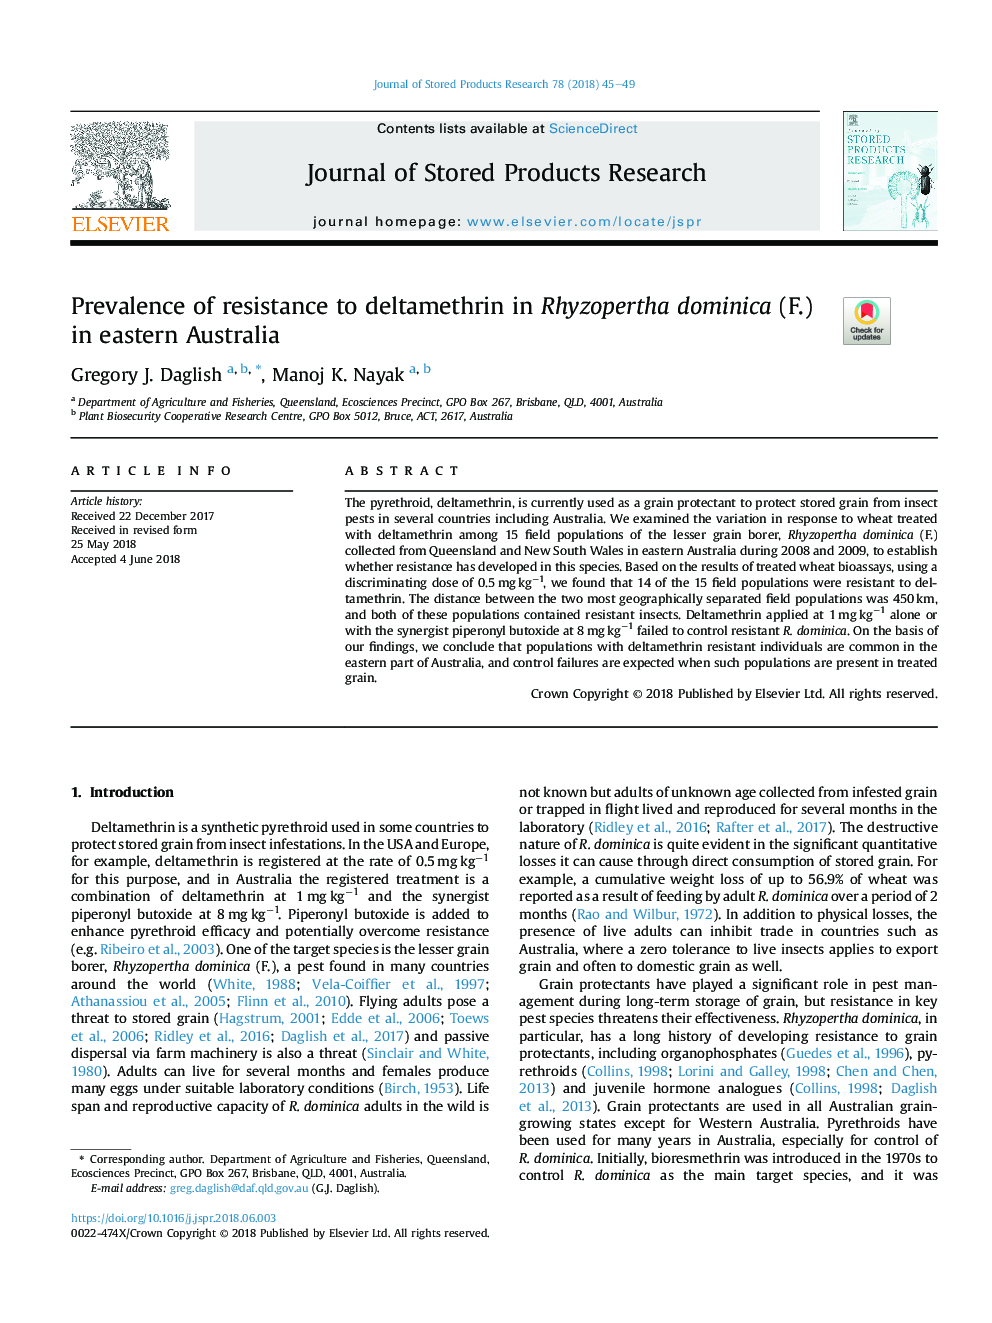 Prevalence of resistance to deltamethrin in Rhyzopertha dominica (F.) in eastern Australia